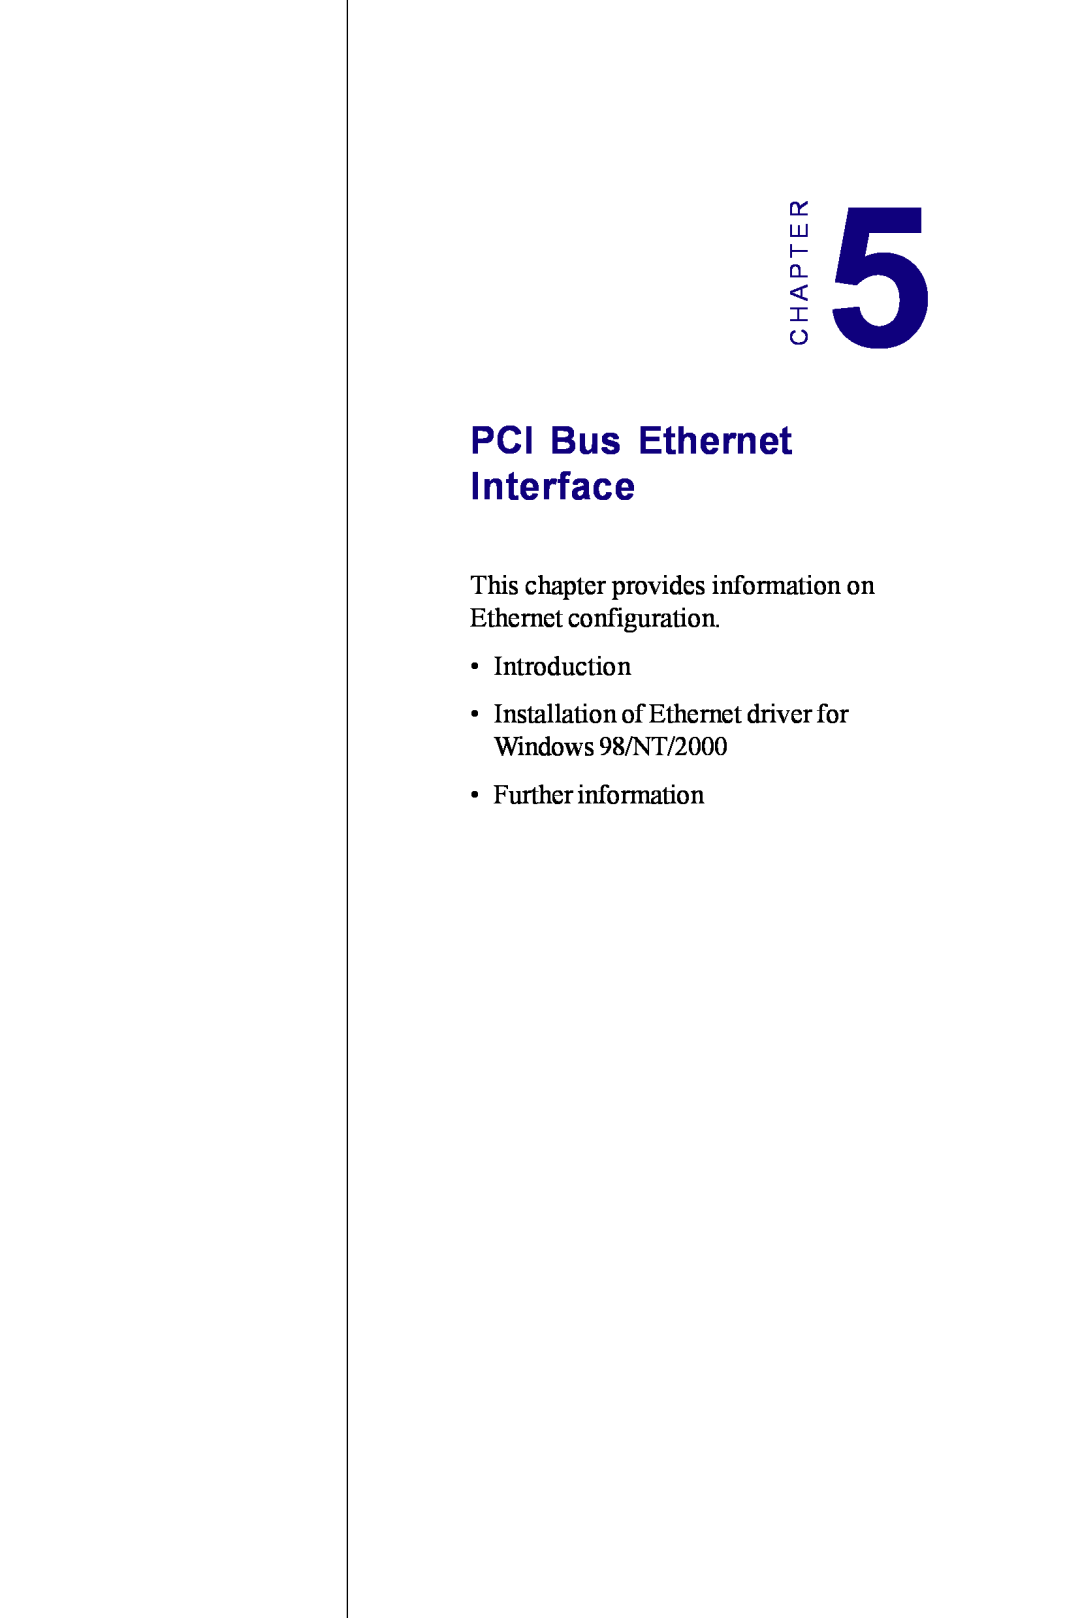 Advantech PCM-3350 Series PCI Bus Ethernet Interface, This chapter provides information on Ethernet configuration 